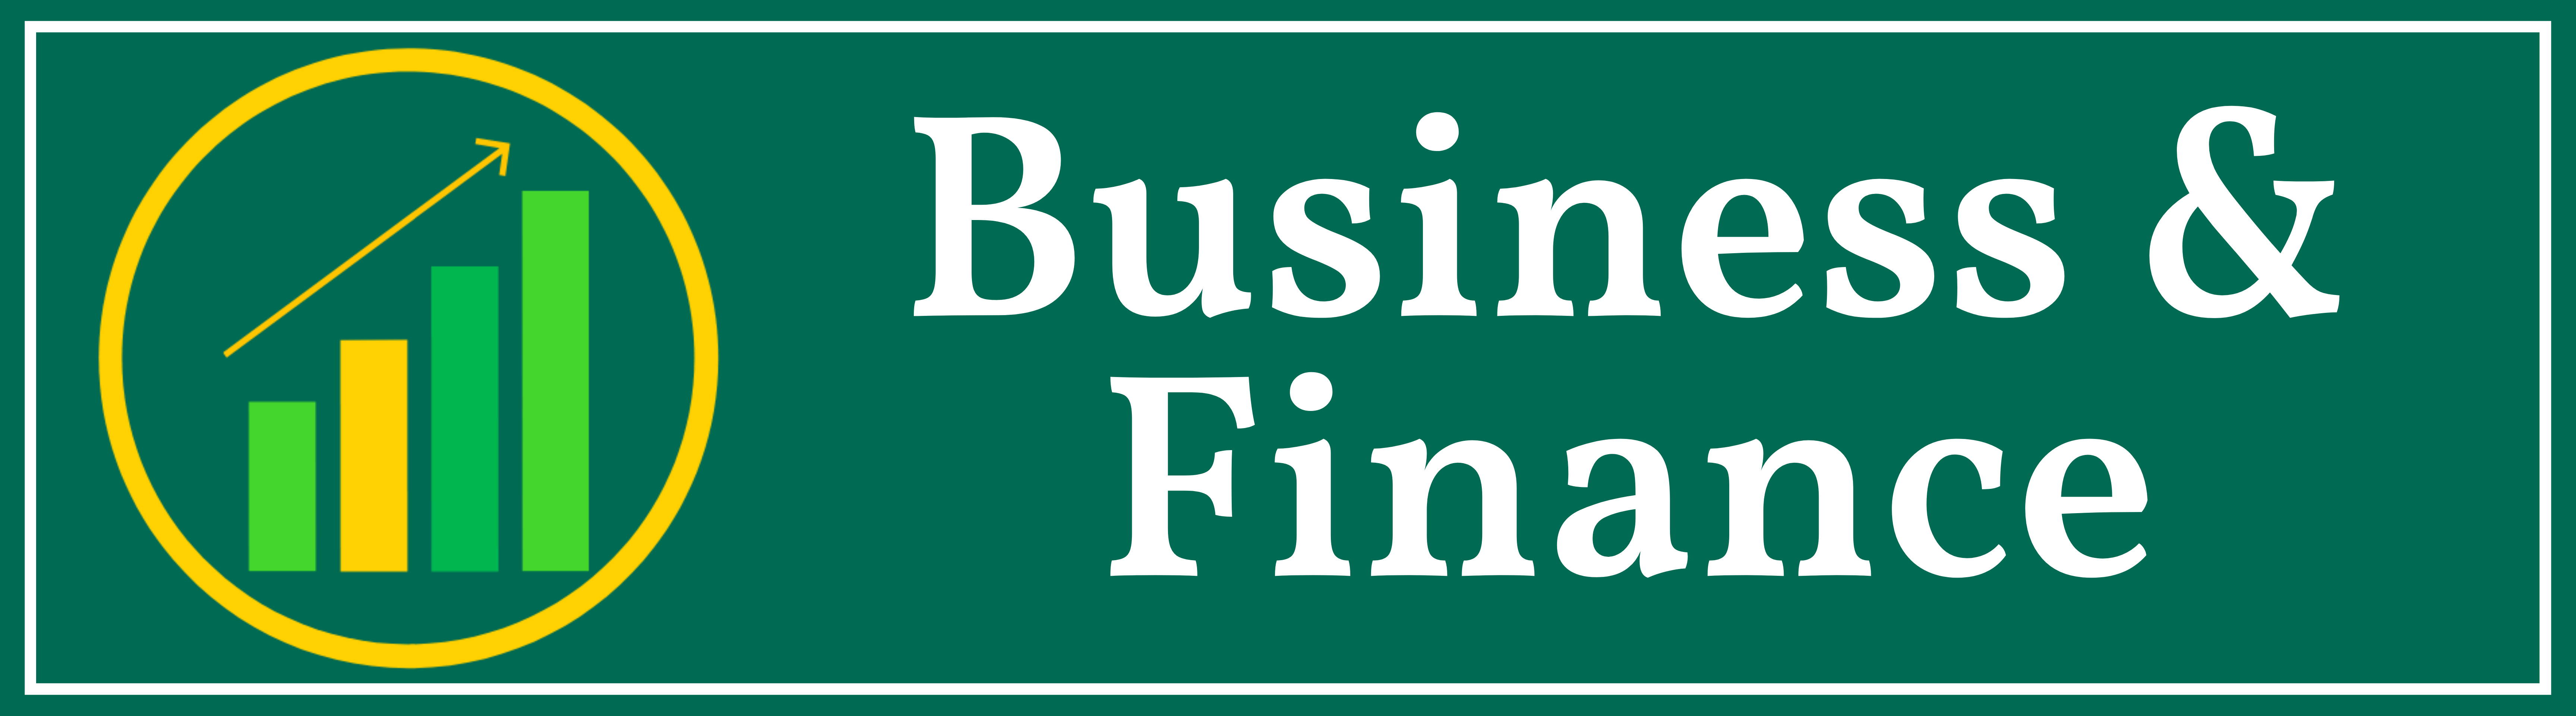 Business & Finance Community